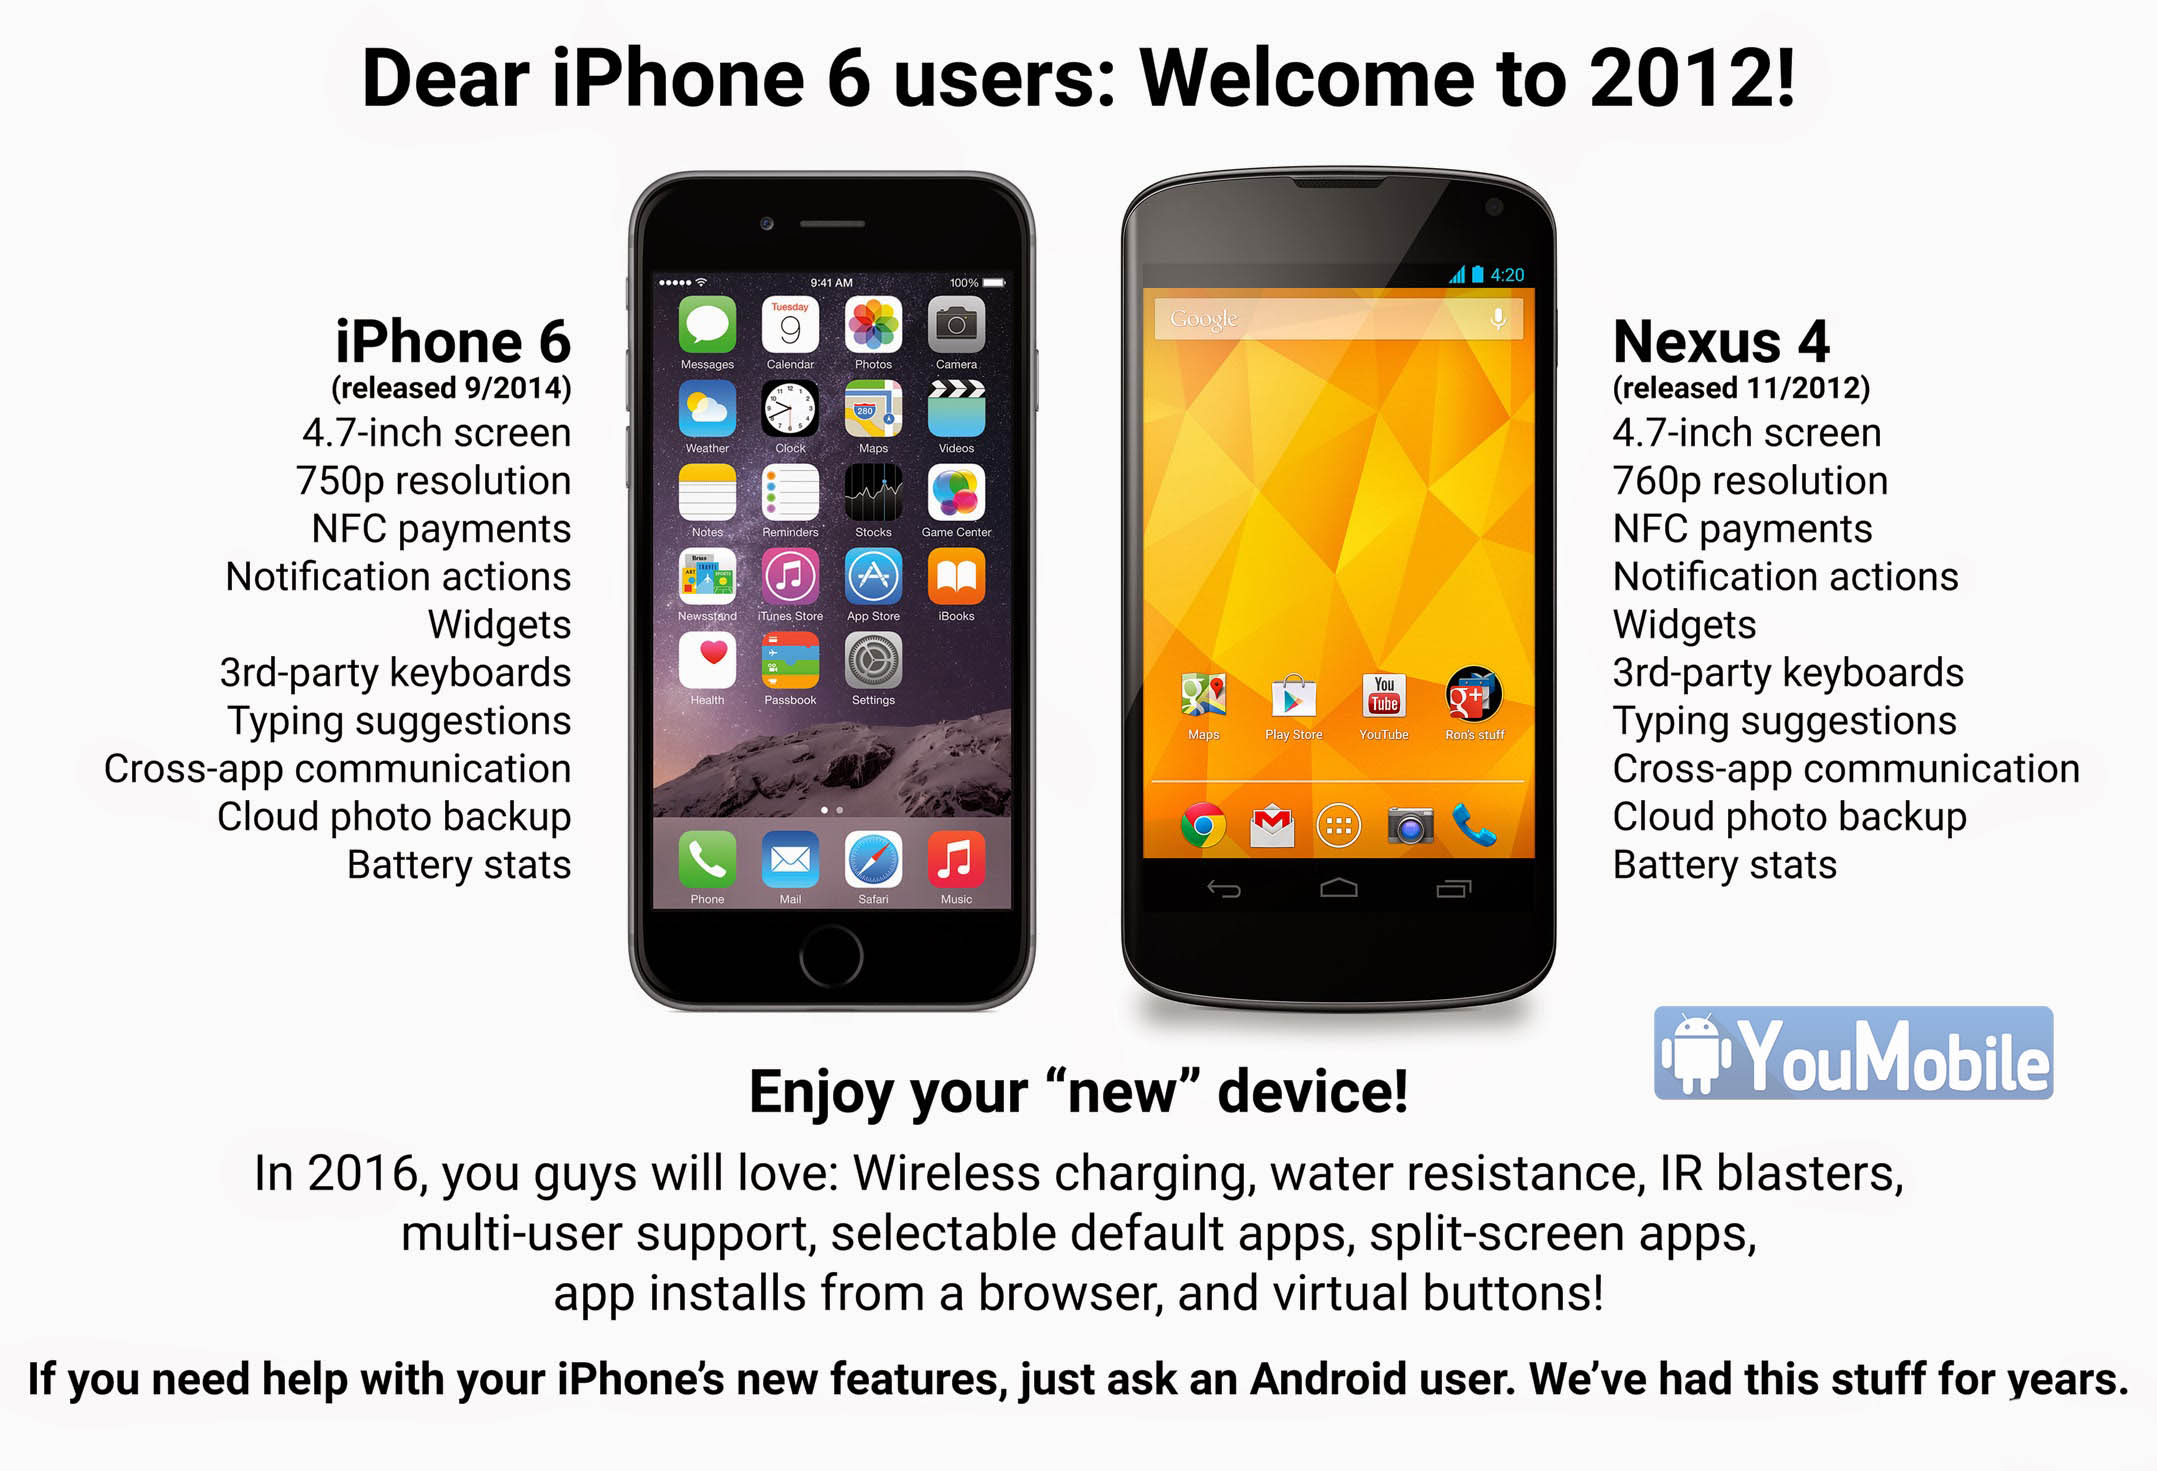 iphone 6 vs Nexus 4